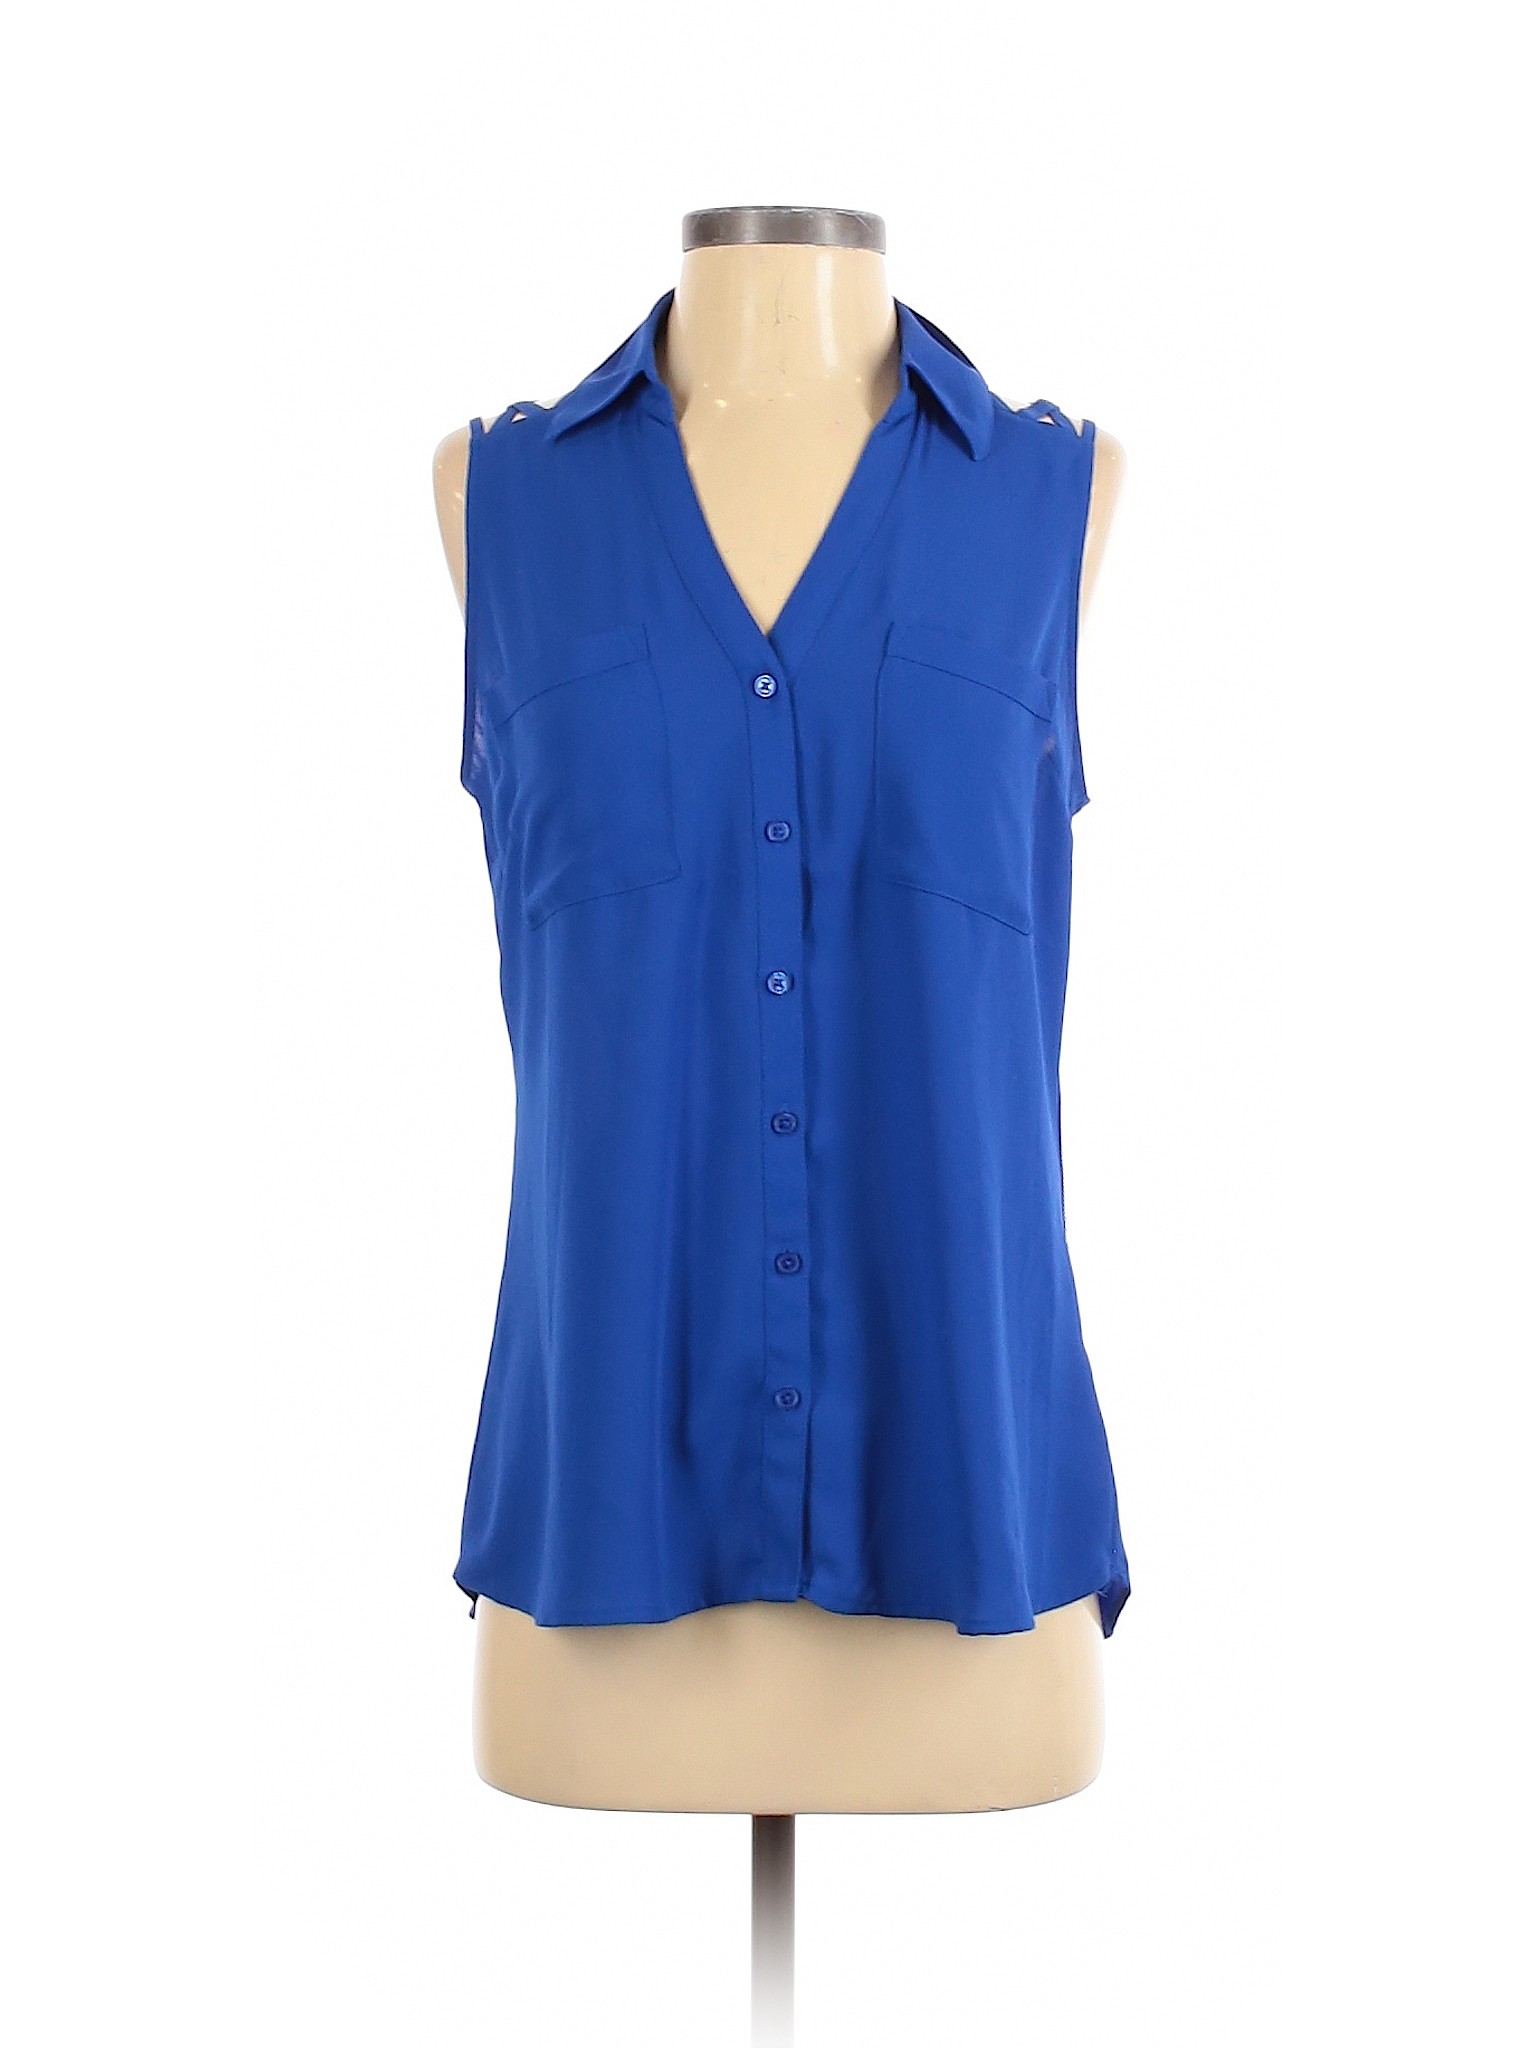 Express Women Blue Sleeveless Blouse S Petites | eBay